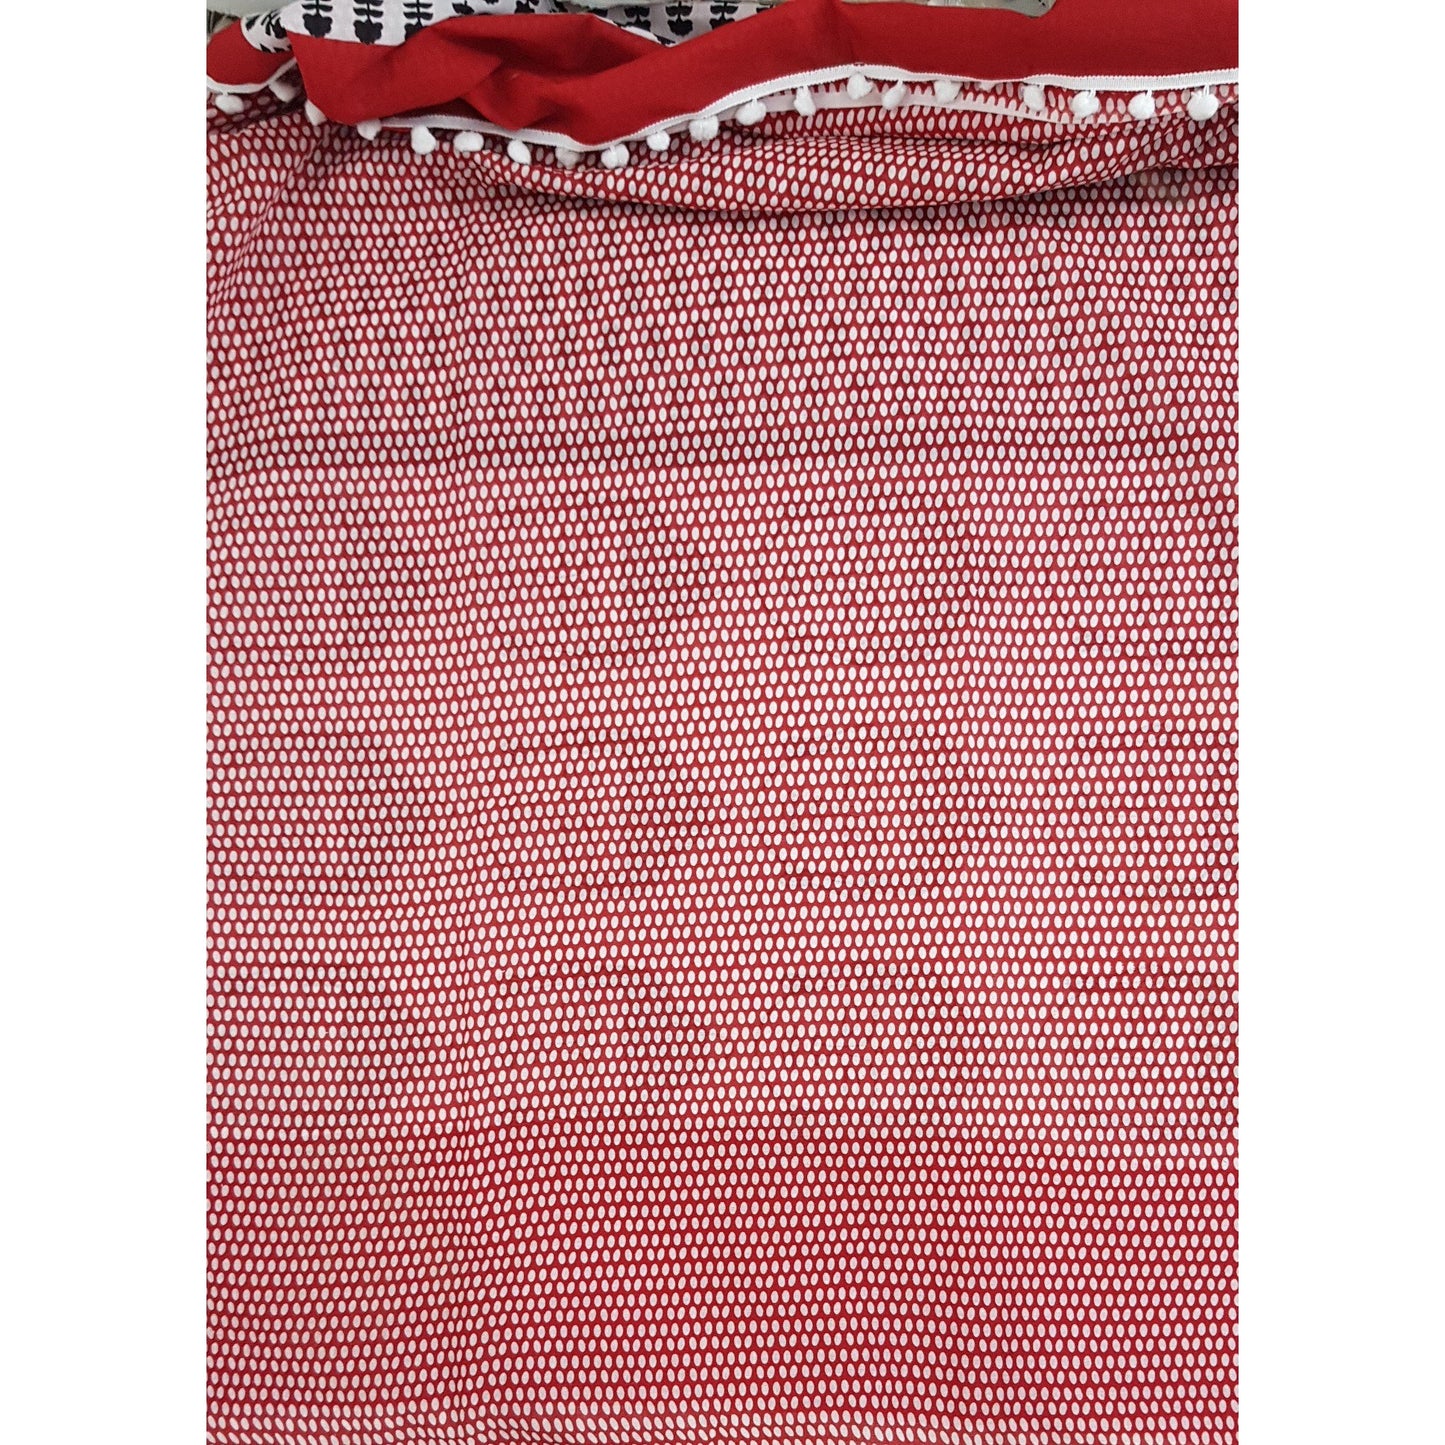 Hand Block Printed Bagru Red and Black color mul mul cotton saree with printed blouse - Vinshika